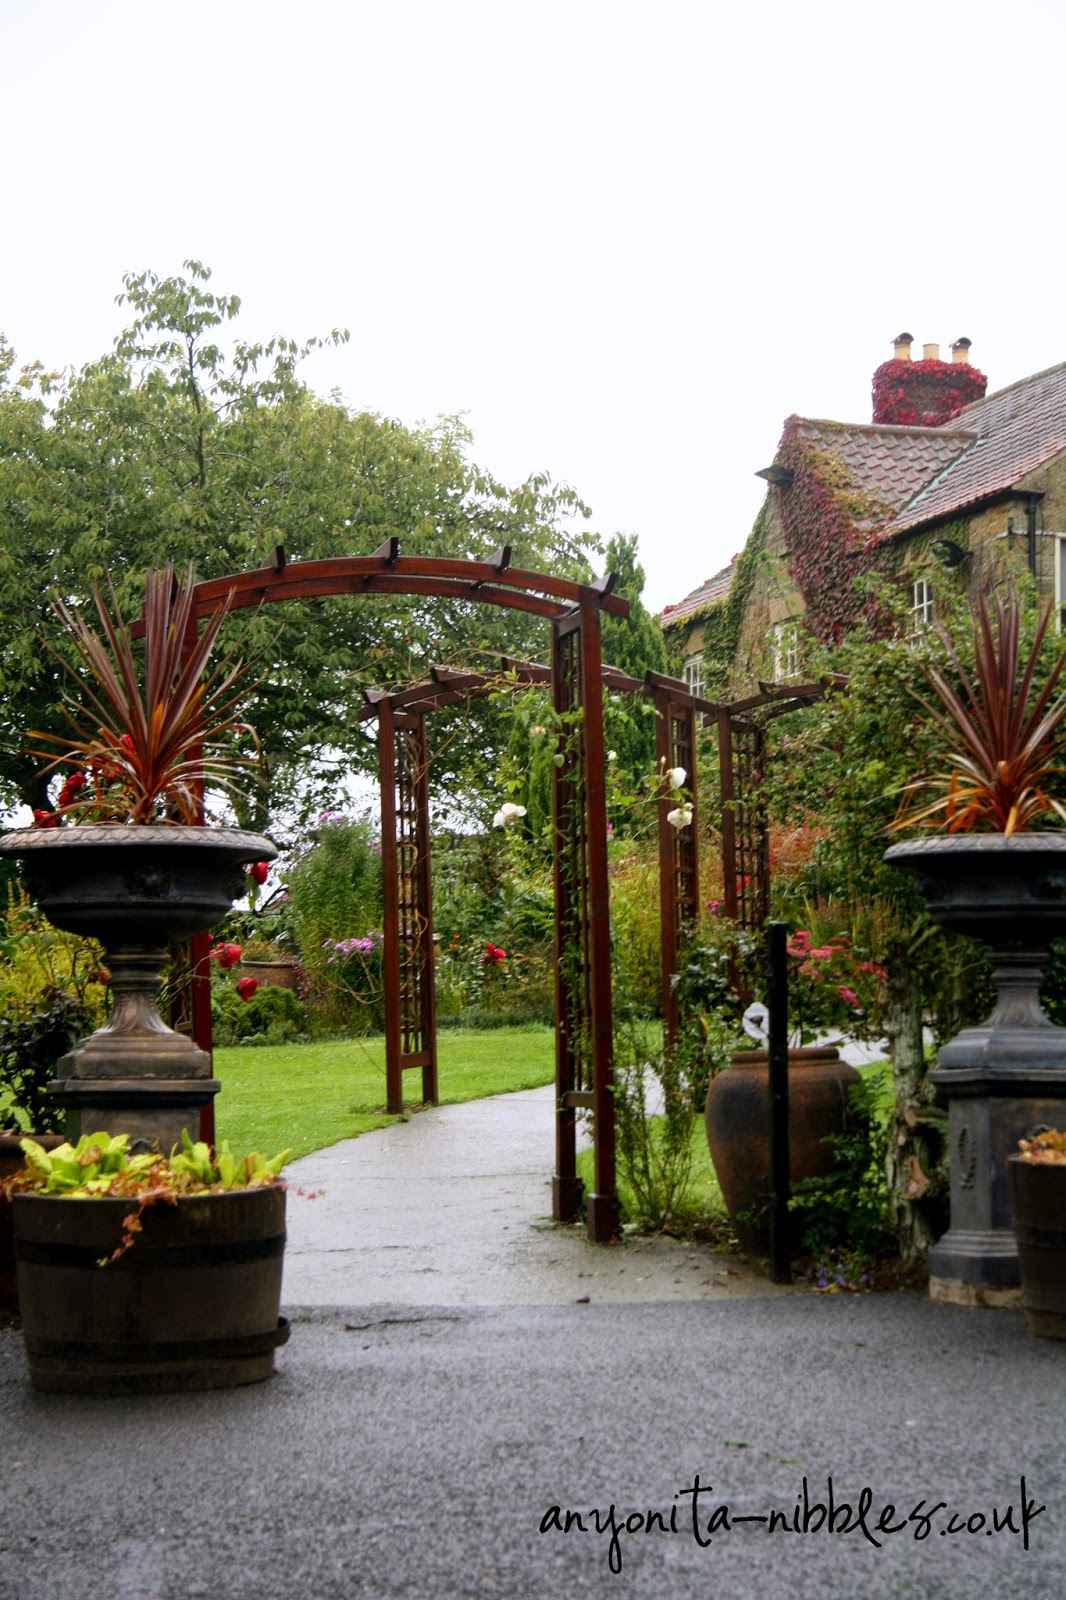 A rain-soaked walk to this quaint North Yorkshire luxury hotel | Anyonita-nibbles.co.uk